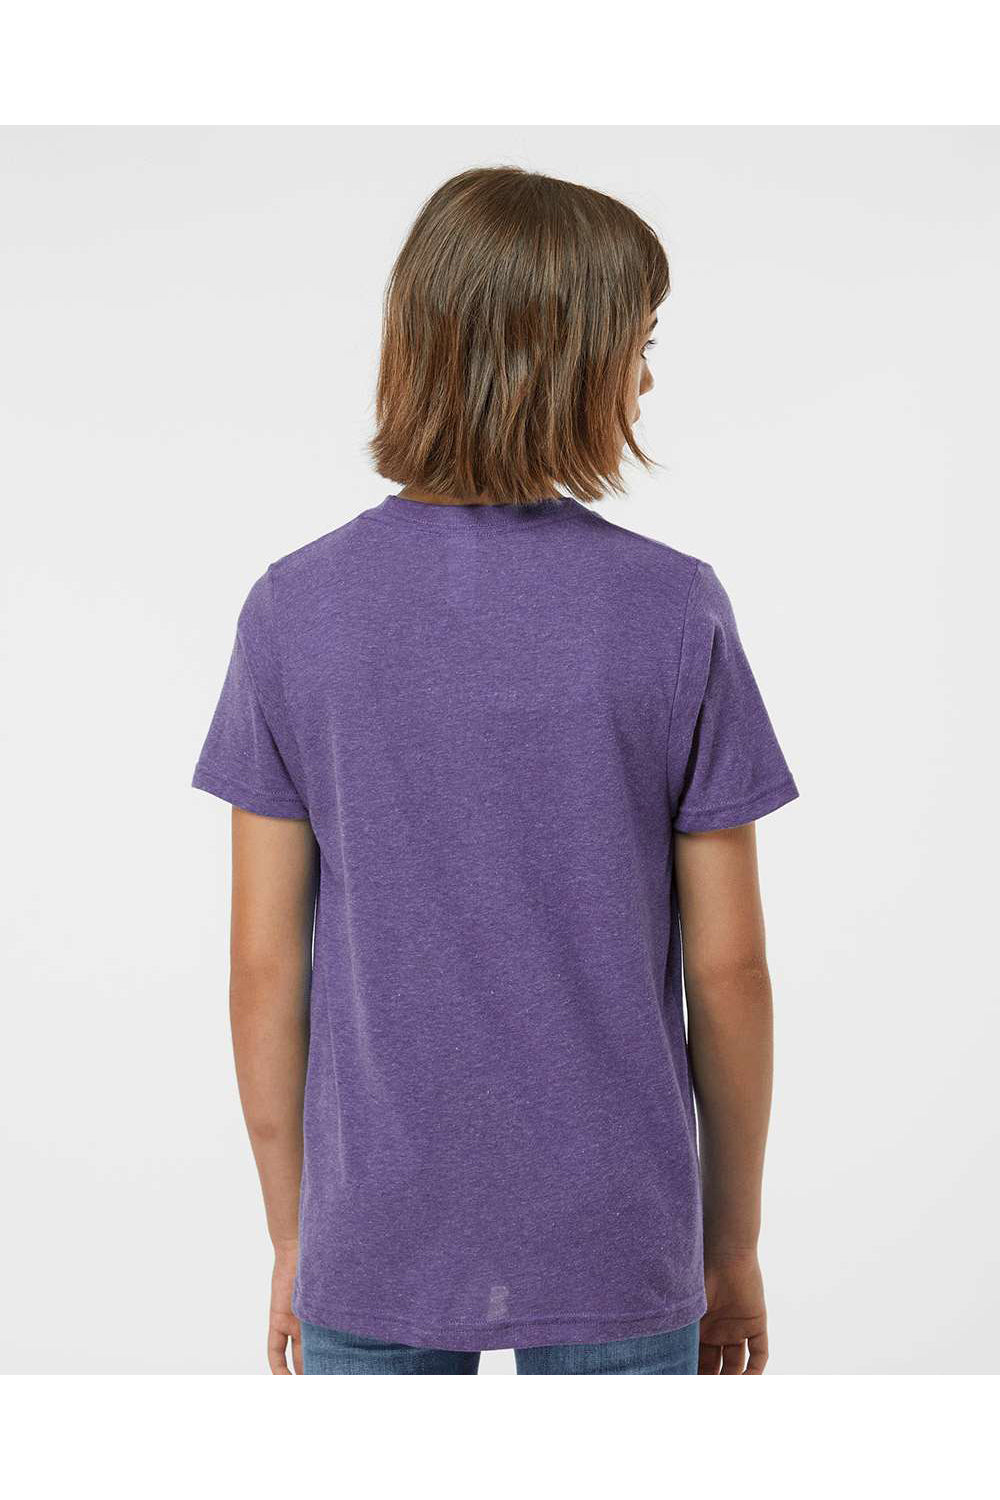 Tultex 265 Youth Poly-Rich Short Sleeve Crewneck T-Shirt Heather Purple Model Back